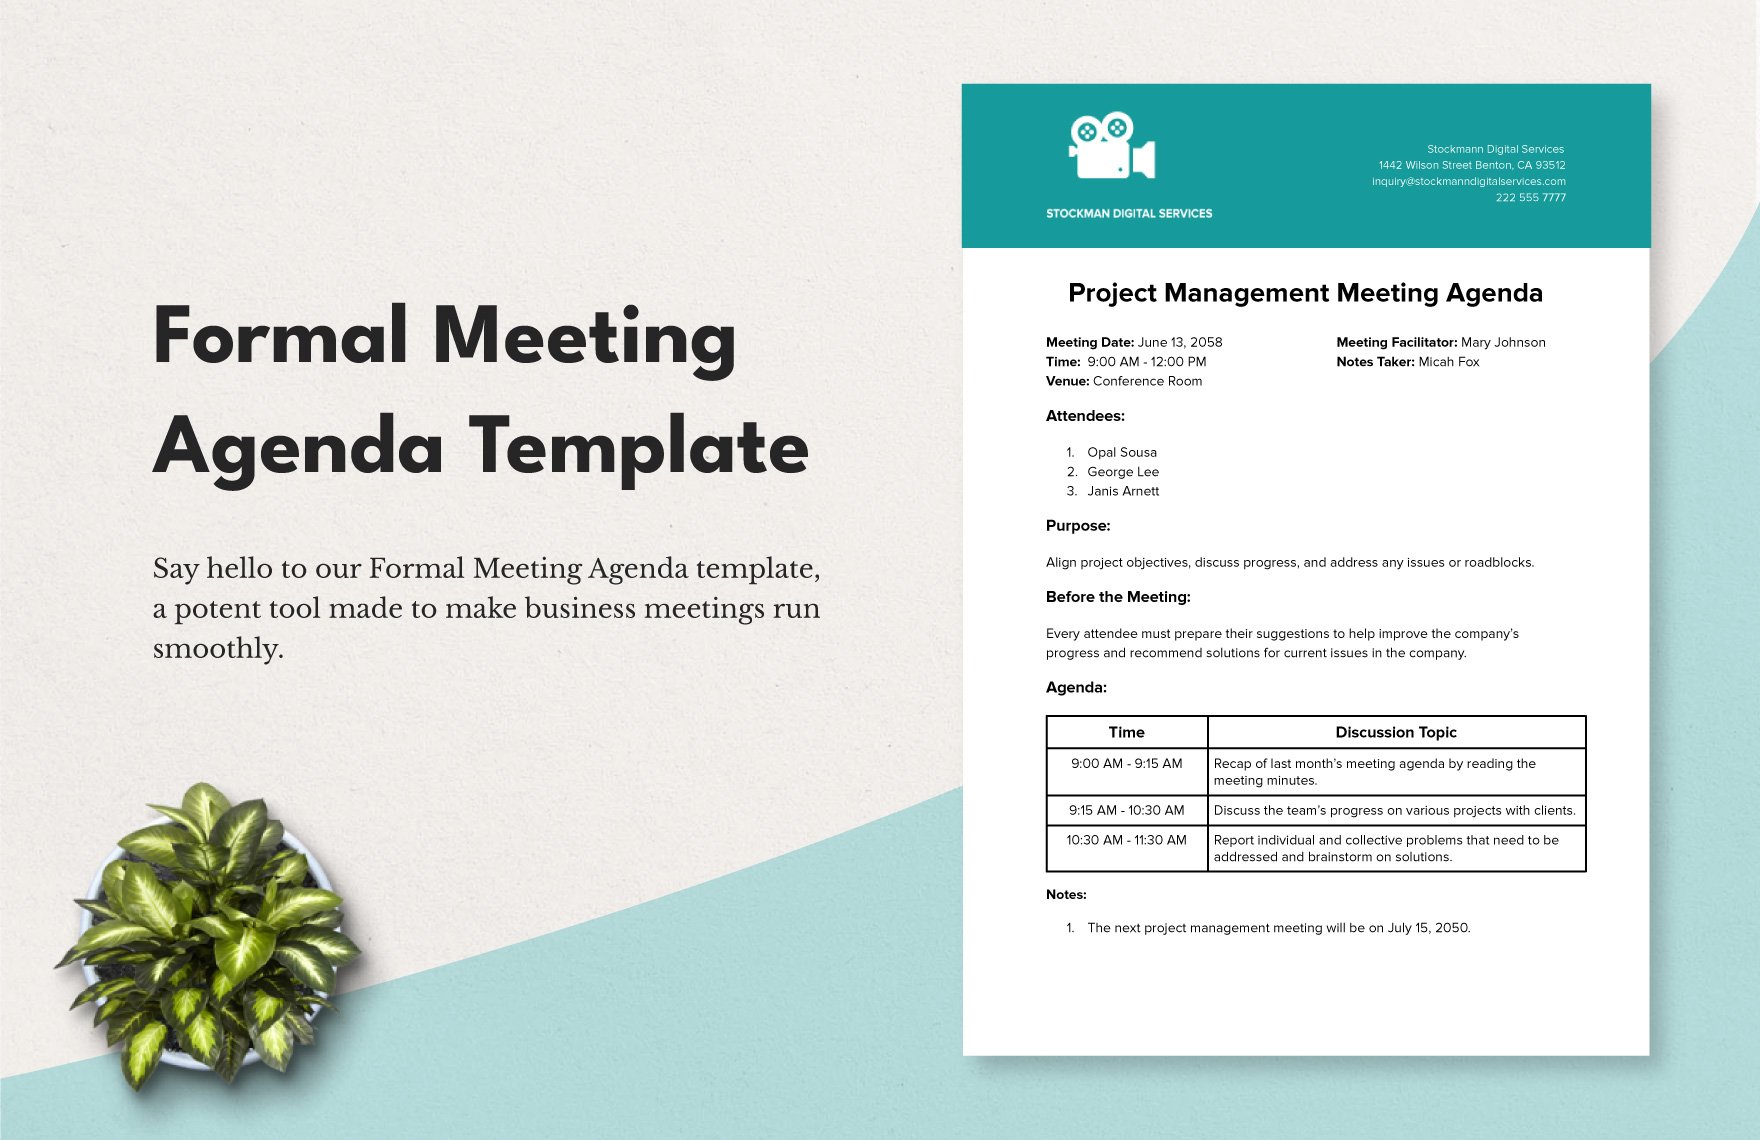 Formal Meeting Agenda Template in Word, Google Docs